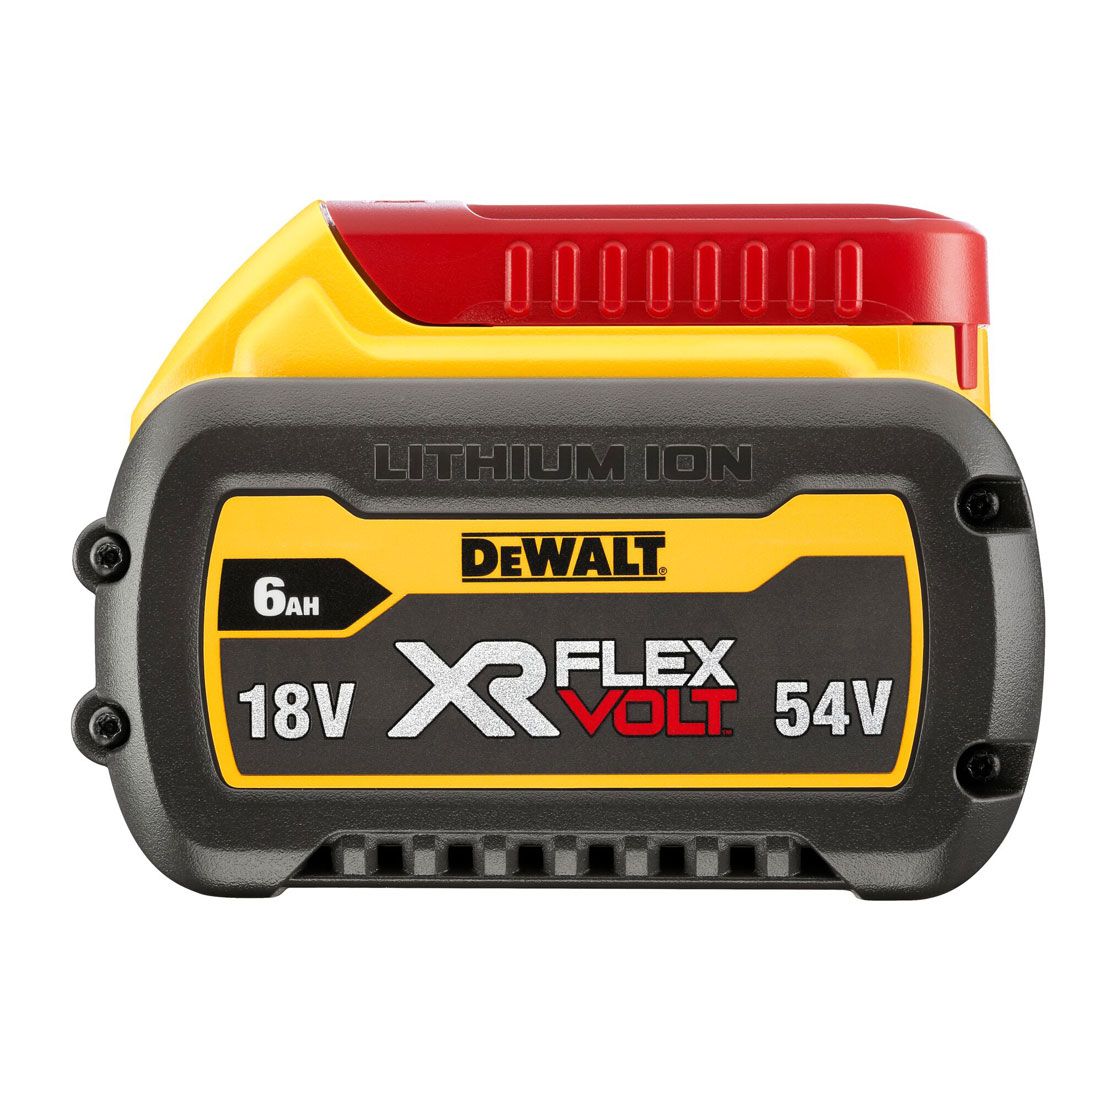 Dewalt DCB546 Xr Flexvolt Convertible 18v/54v Lithium-Ion 6.0ah Battery 0967